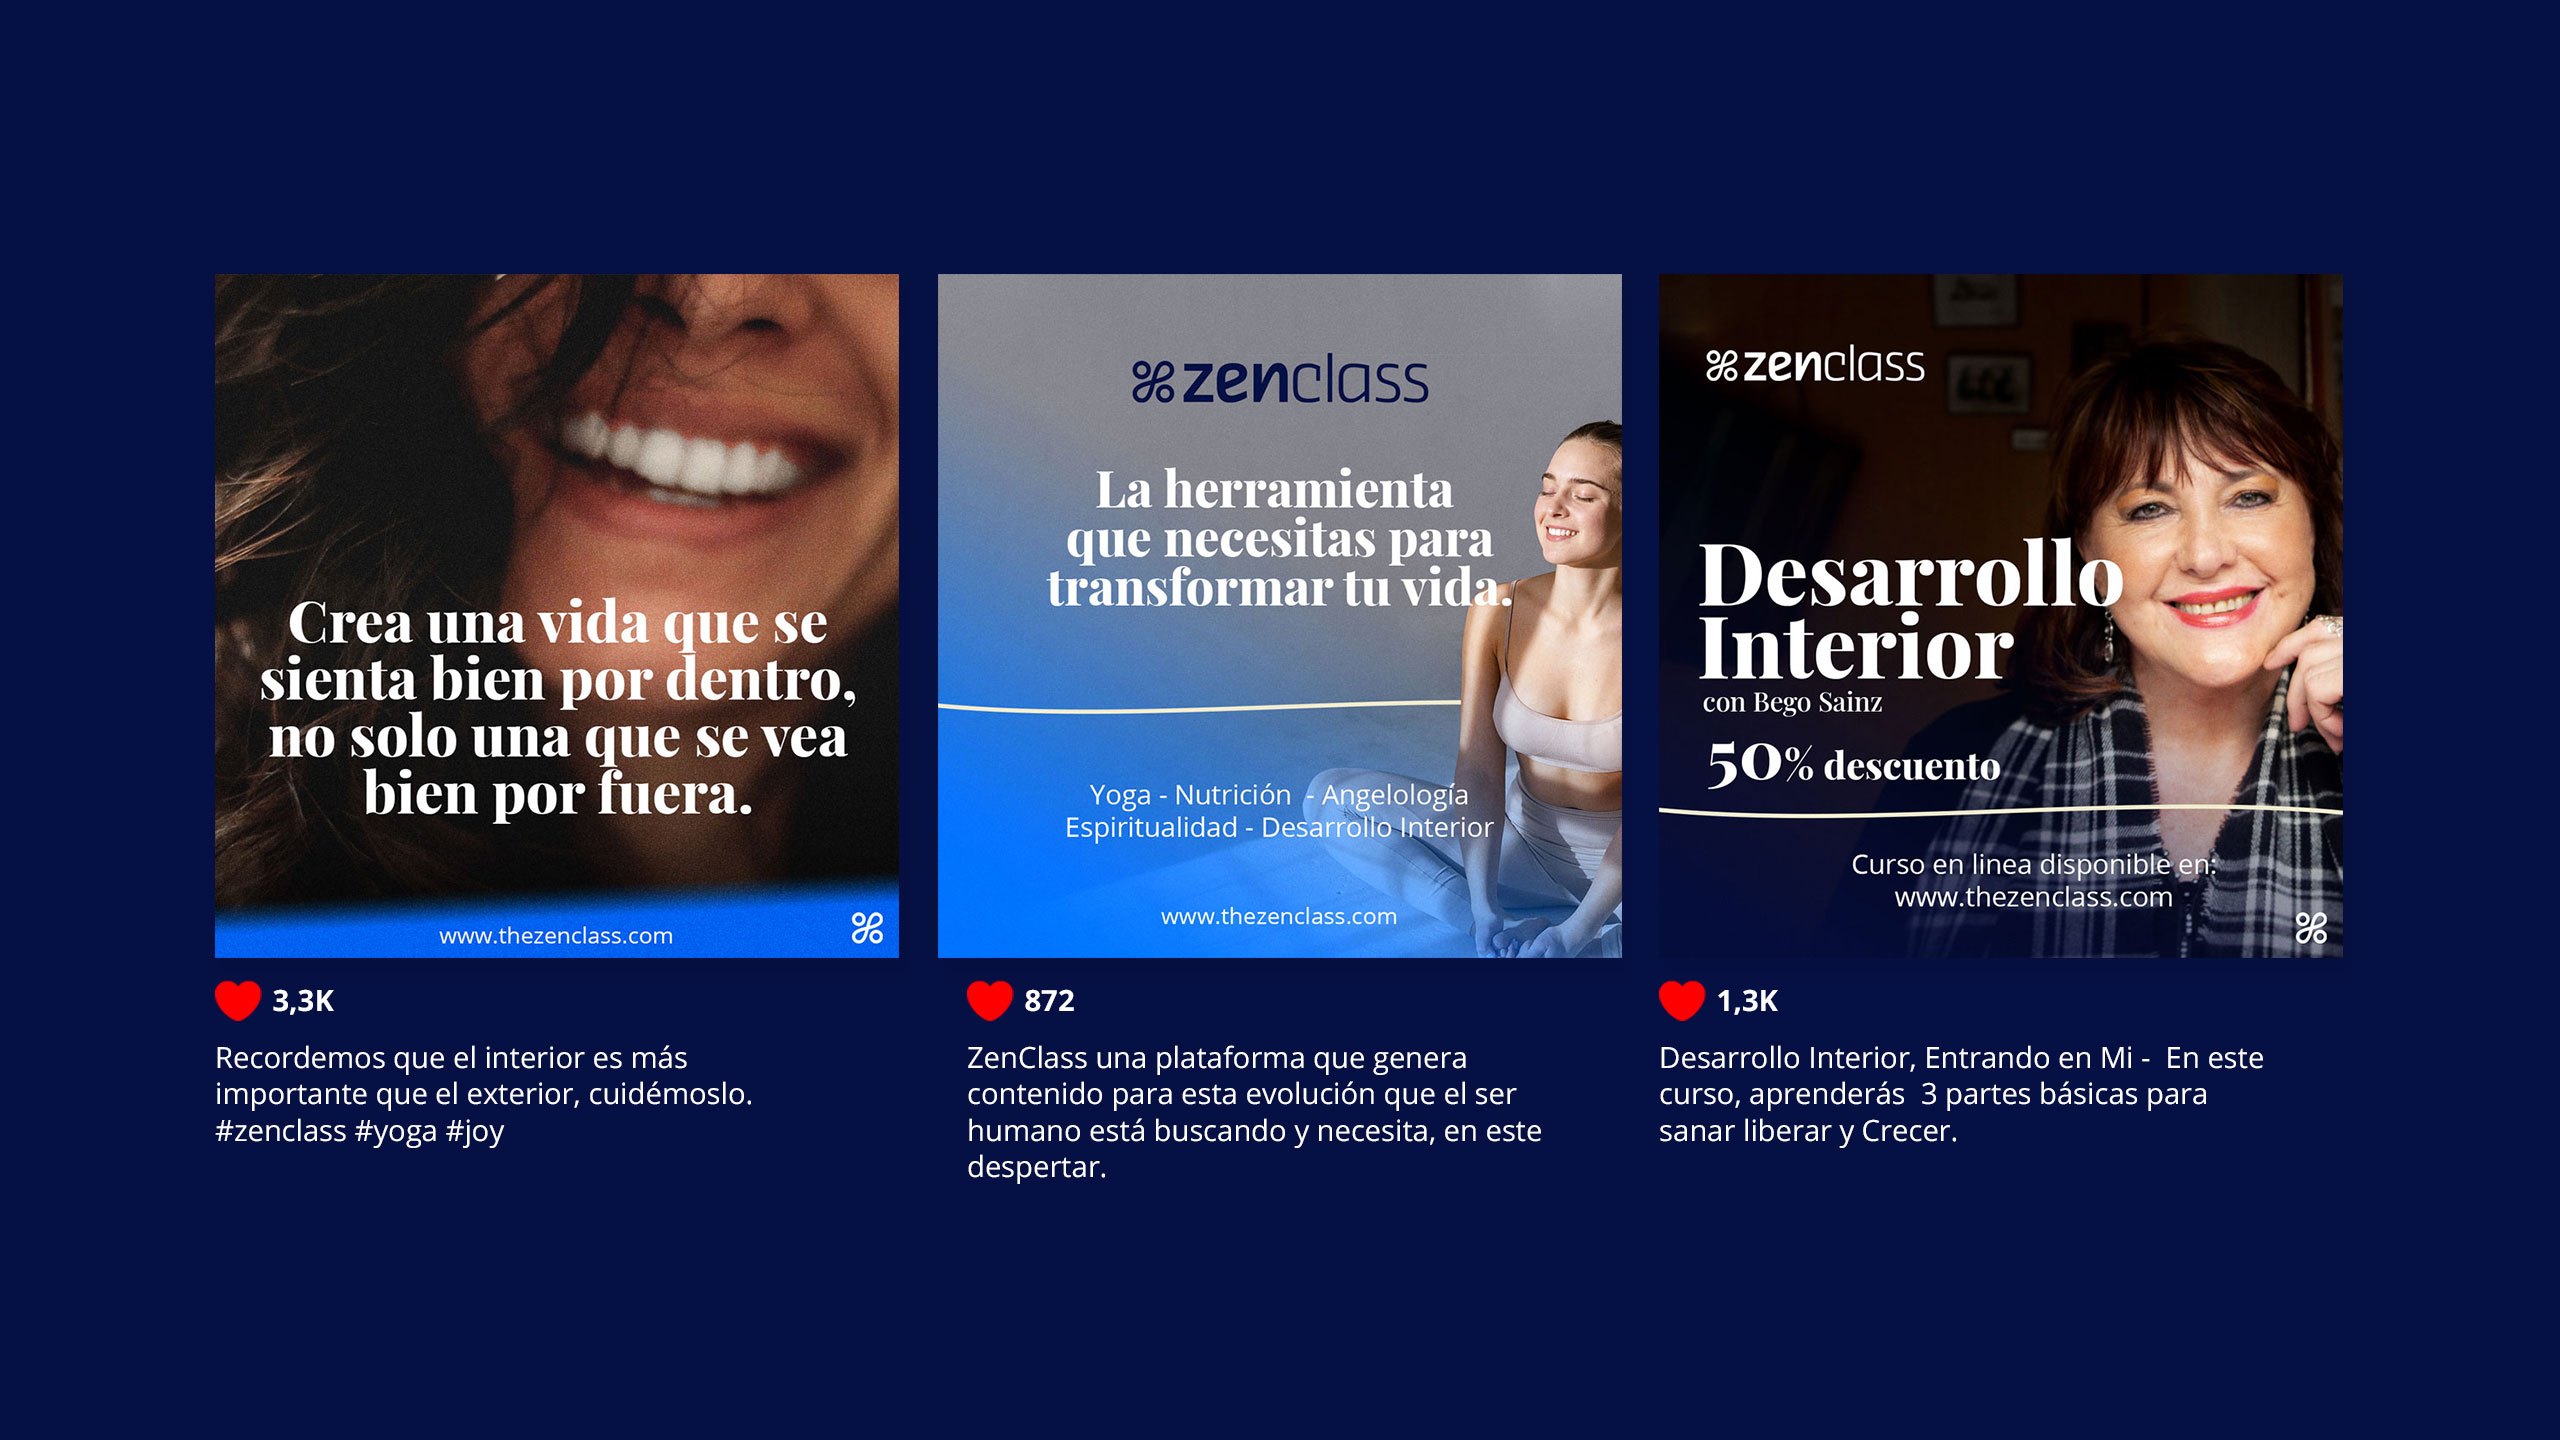 BOOM-agencia-digital-branding-website-case-study-zenclass-socia-media-posts